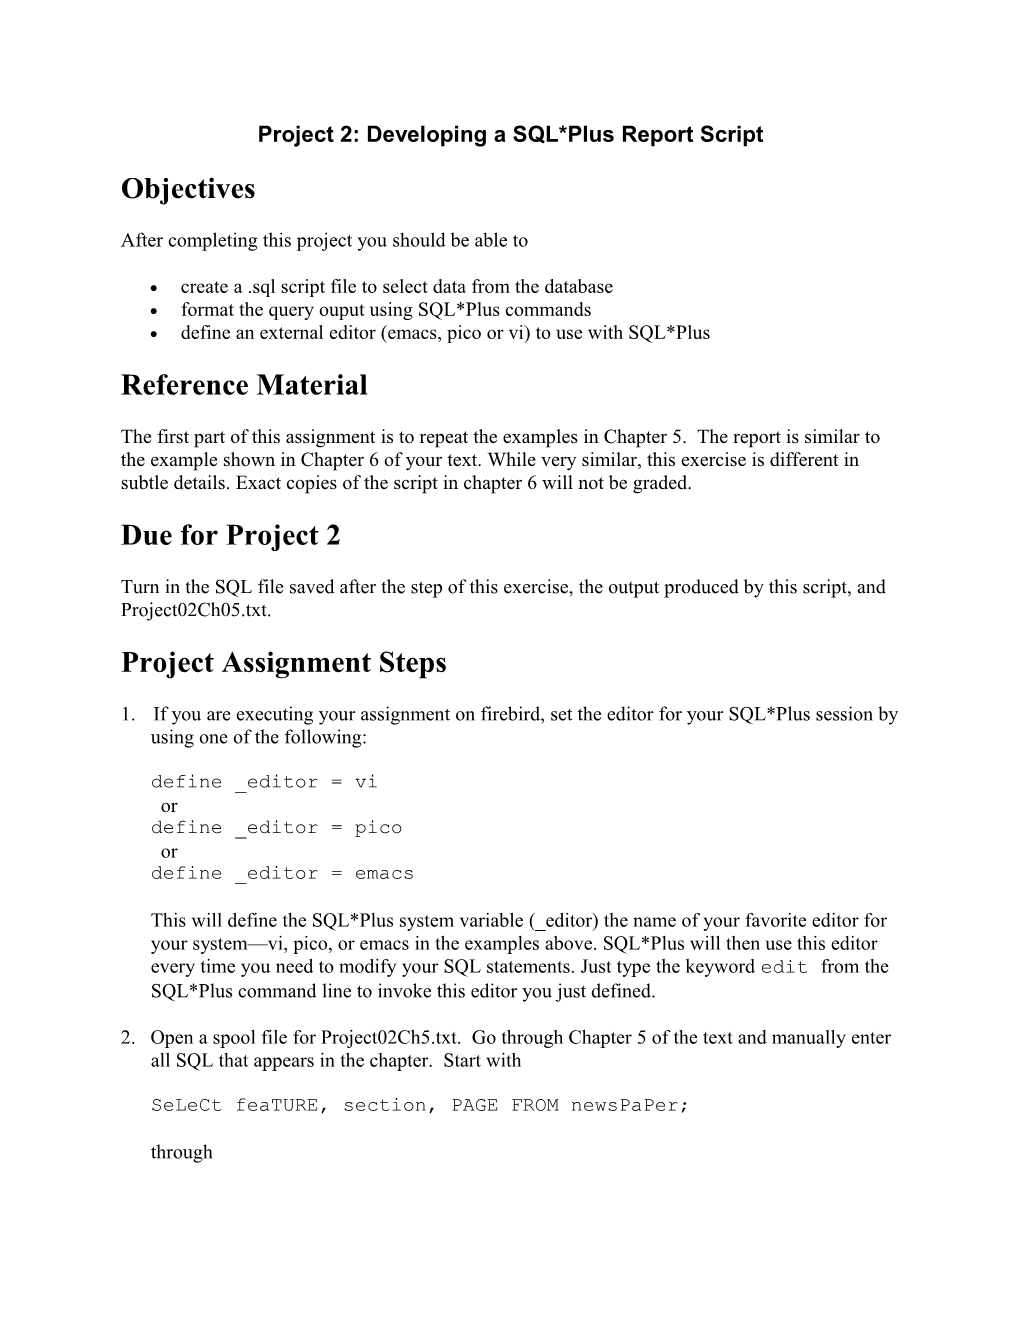 Project 2: Developing a SQL*Plus Report Script